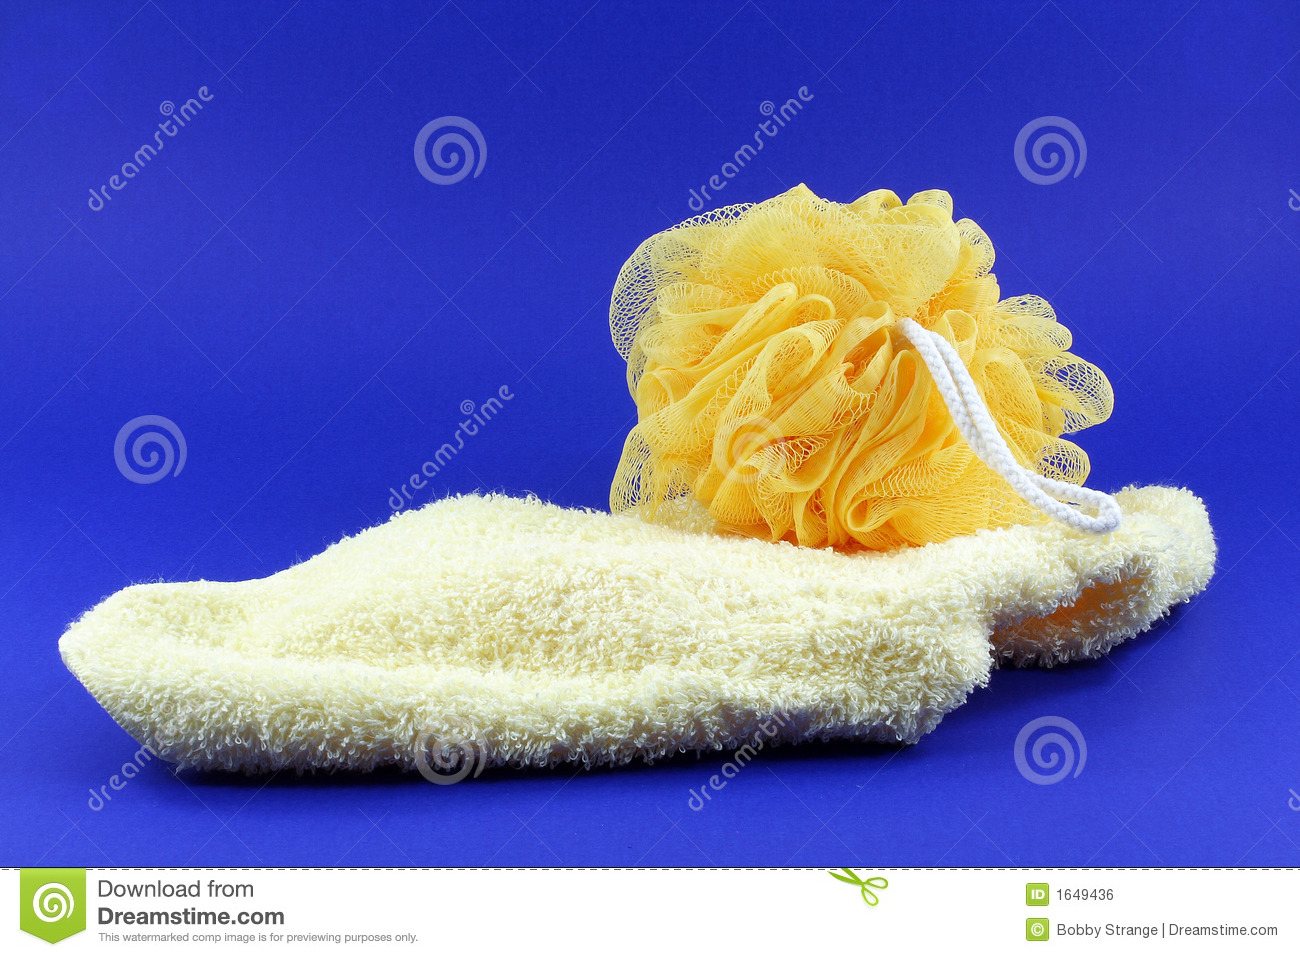 Body Sponge And Wash Cloth Royalty Free Stock Image   Image  1649436